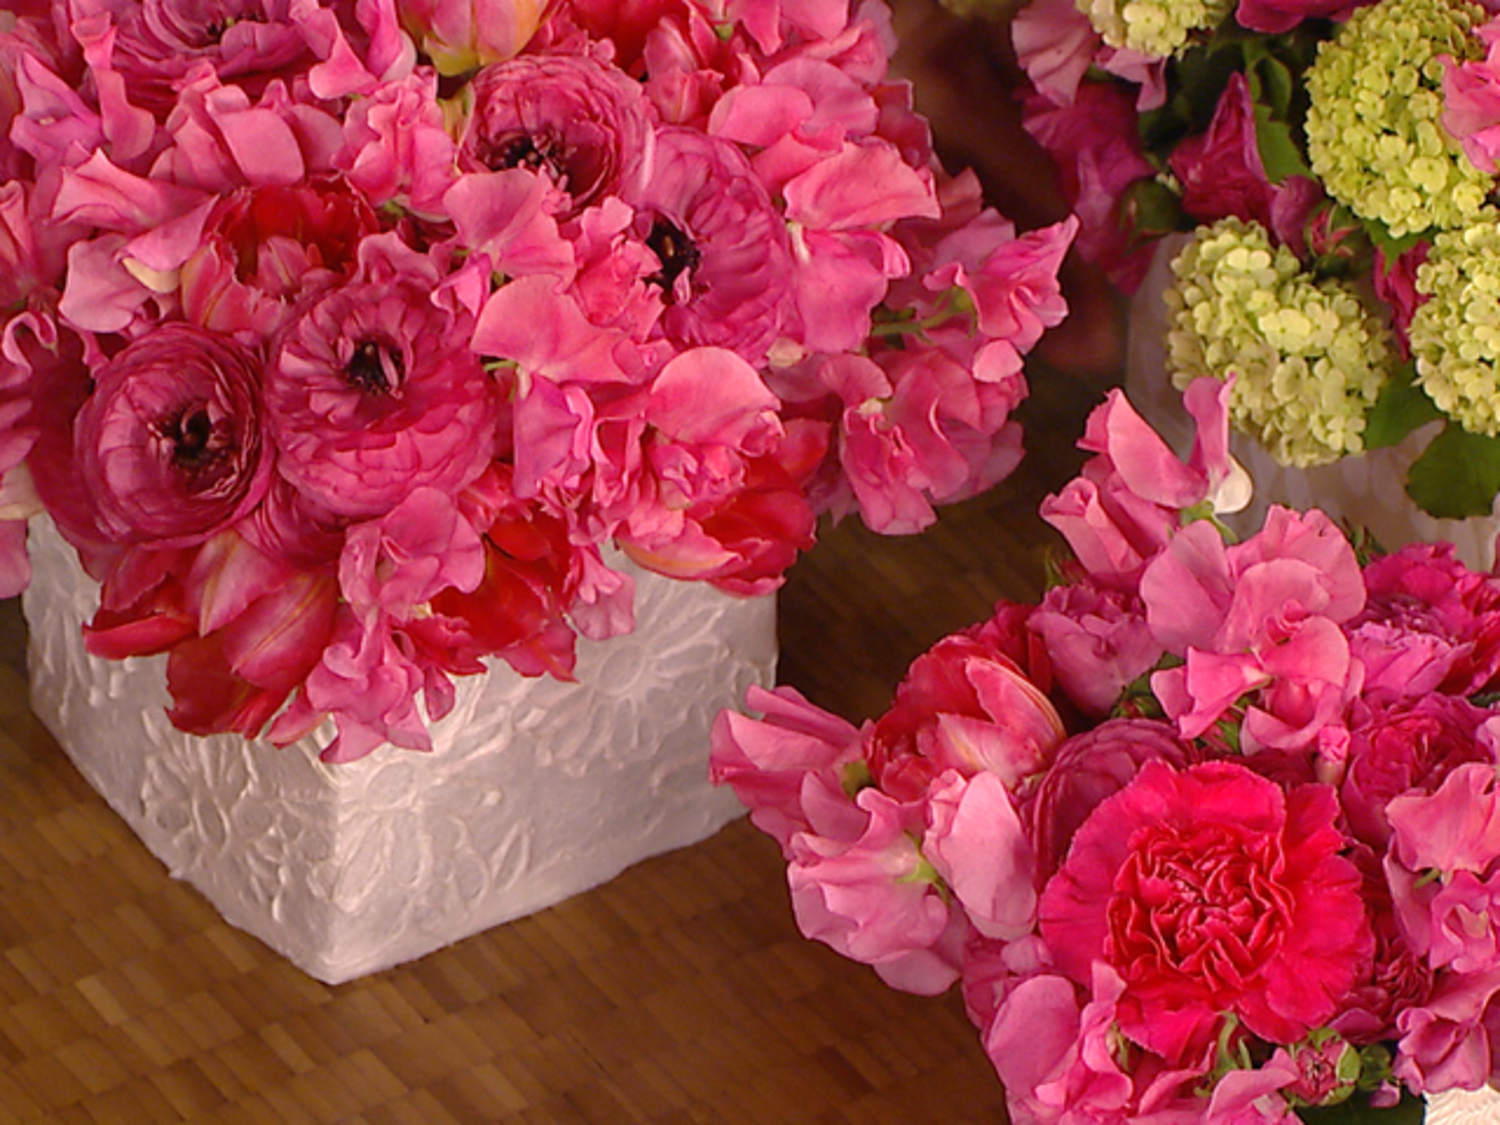 Get crafty with fresh DIY floral arrangements